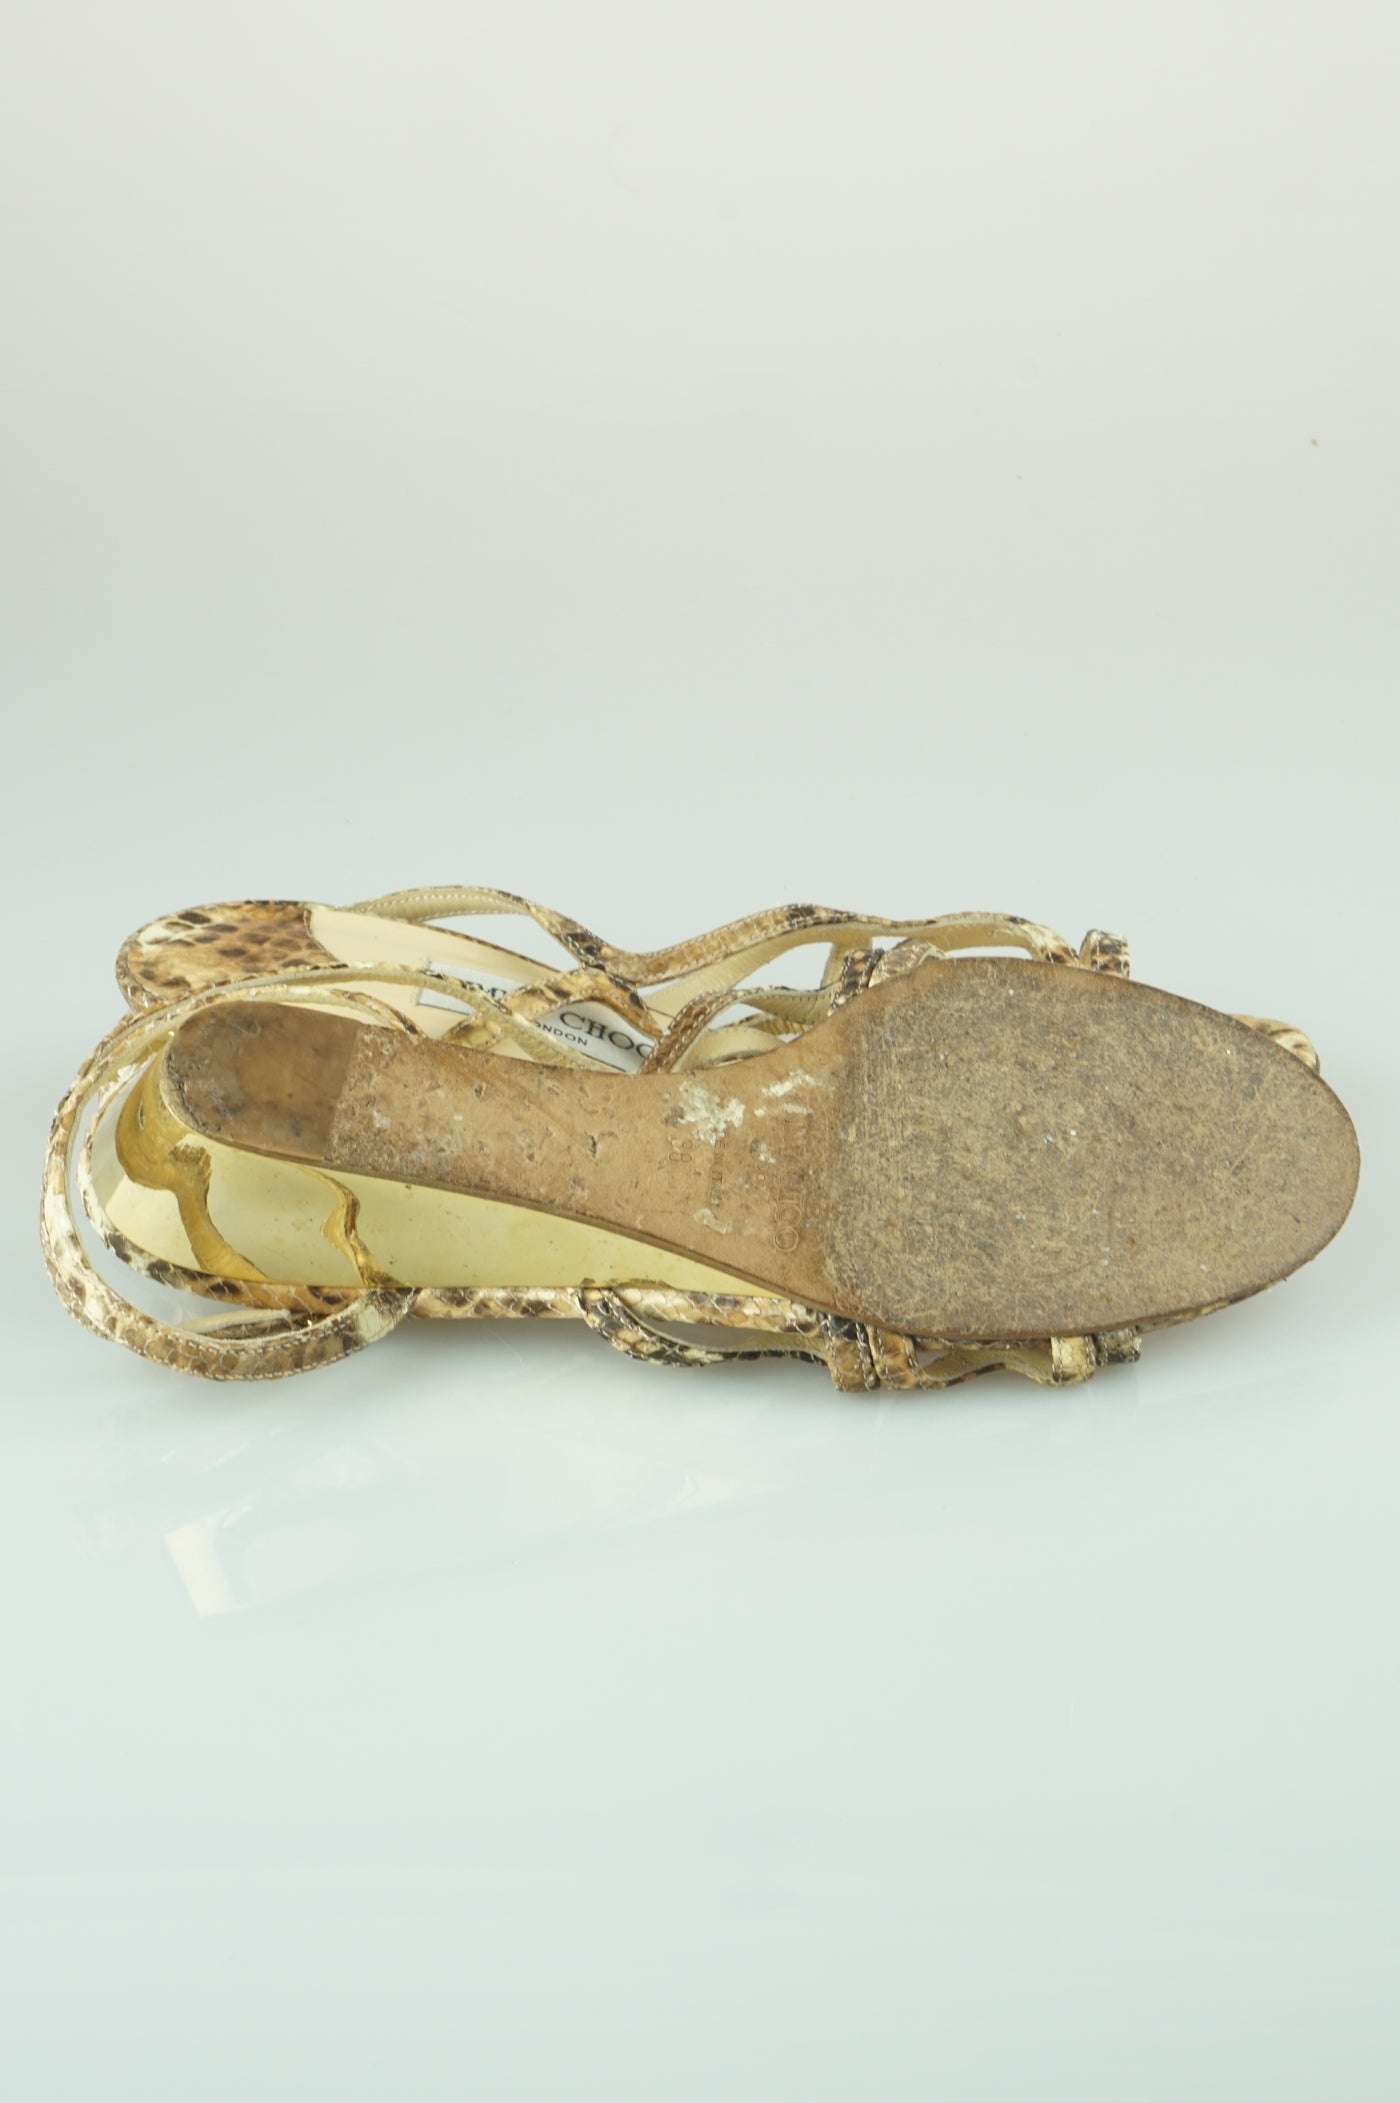 Snakeskin wedge sandals